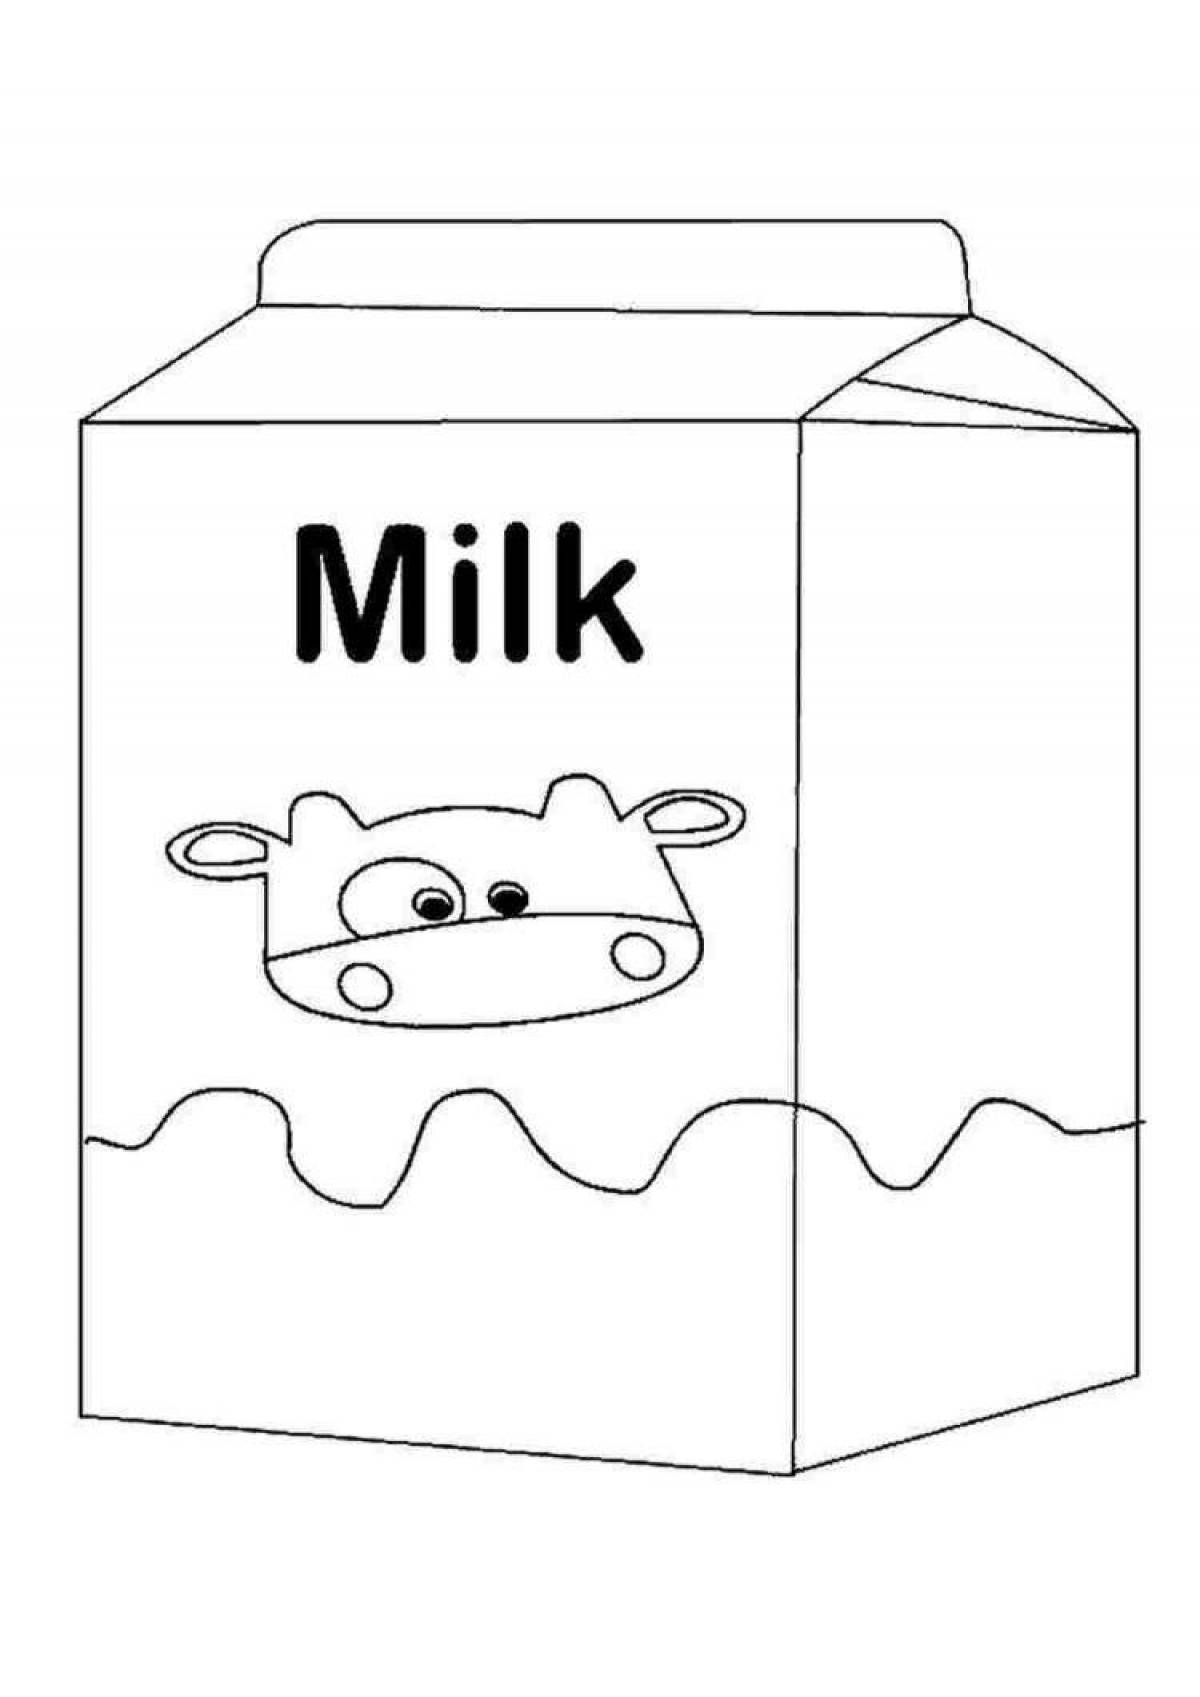 Cute milk coloring